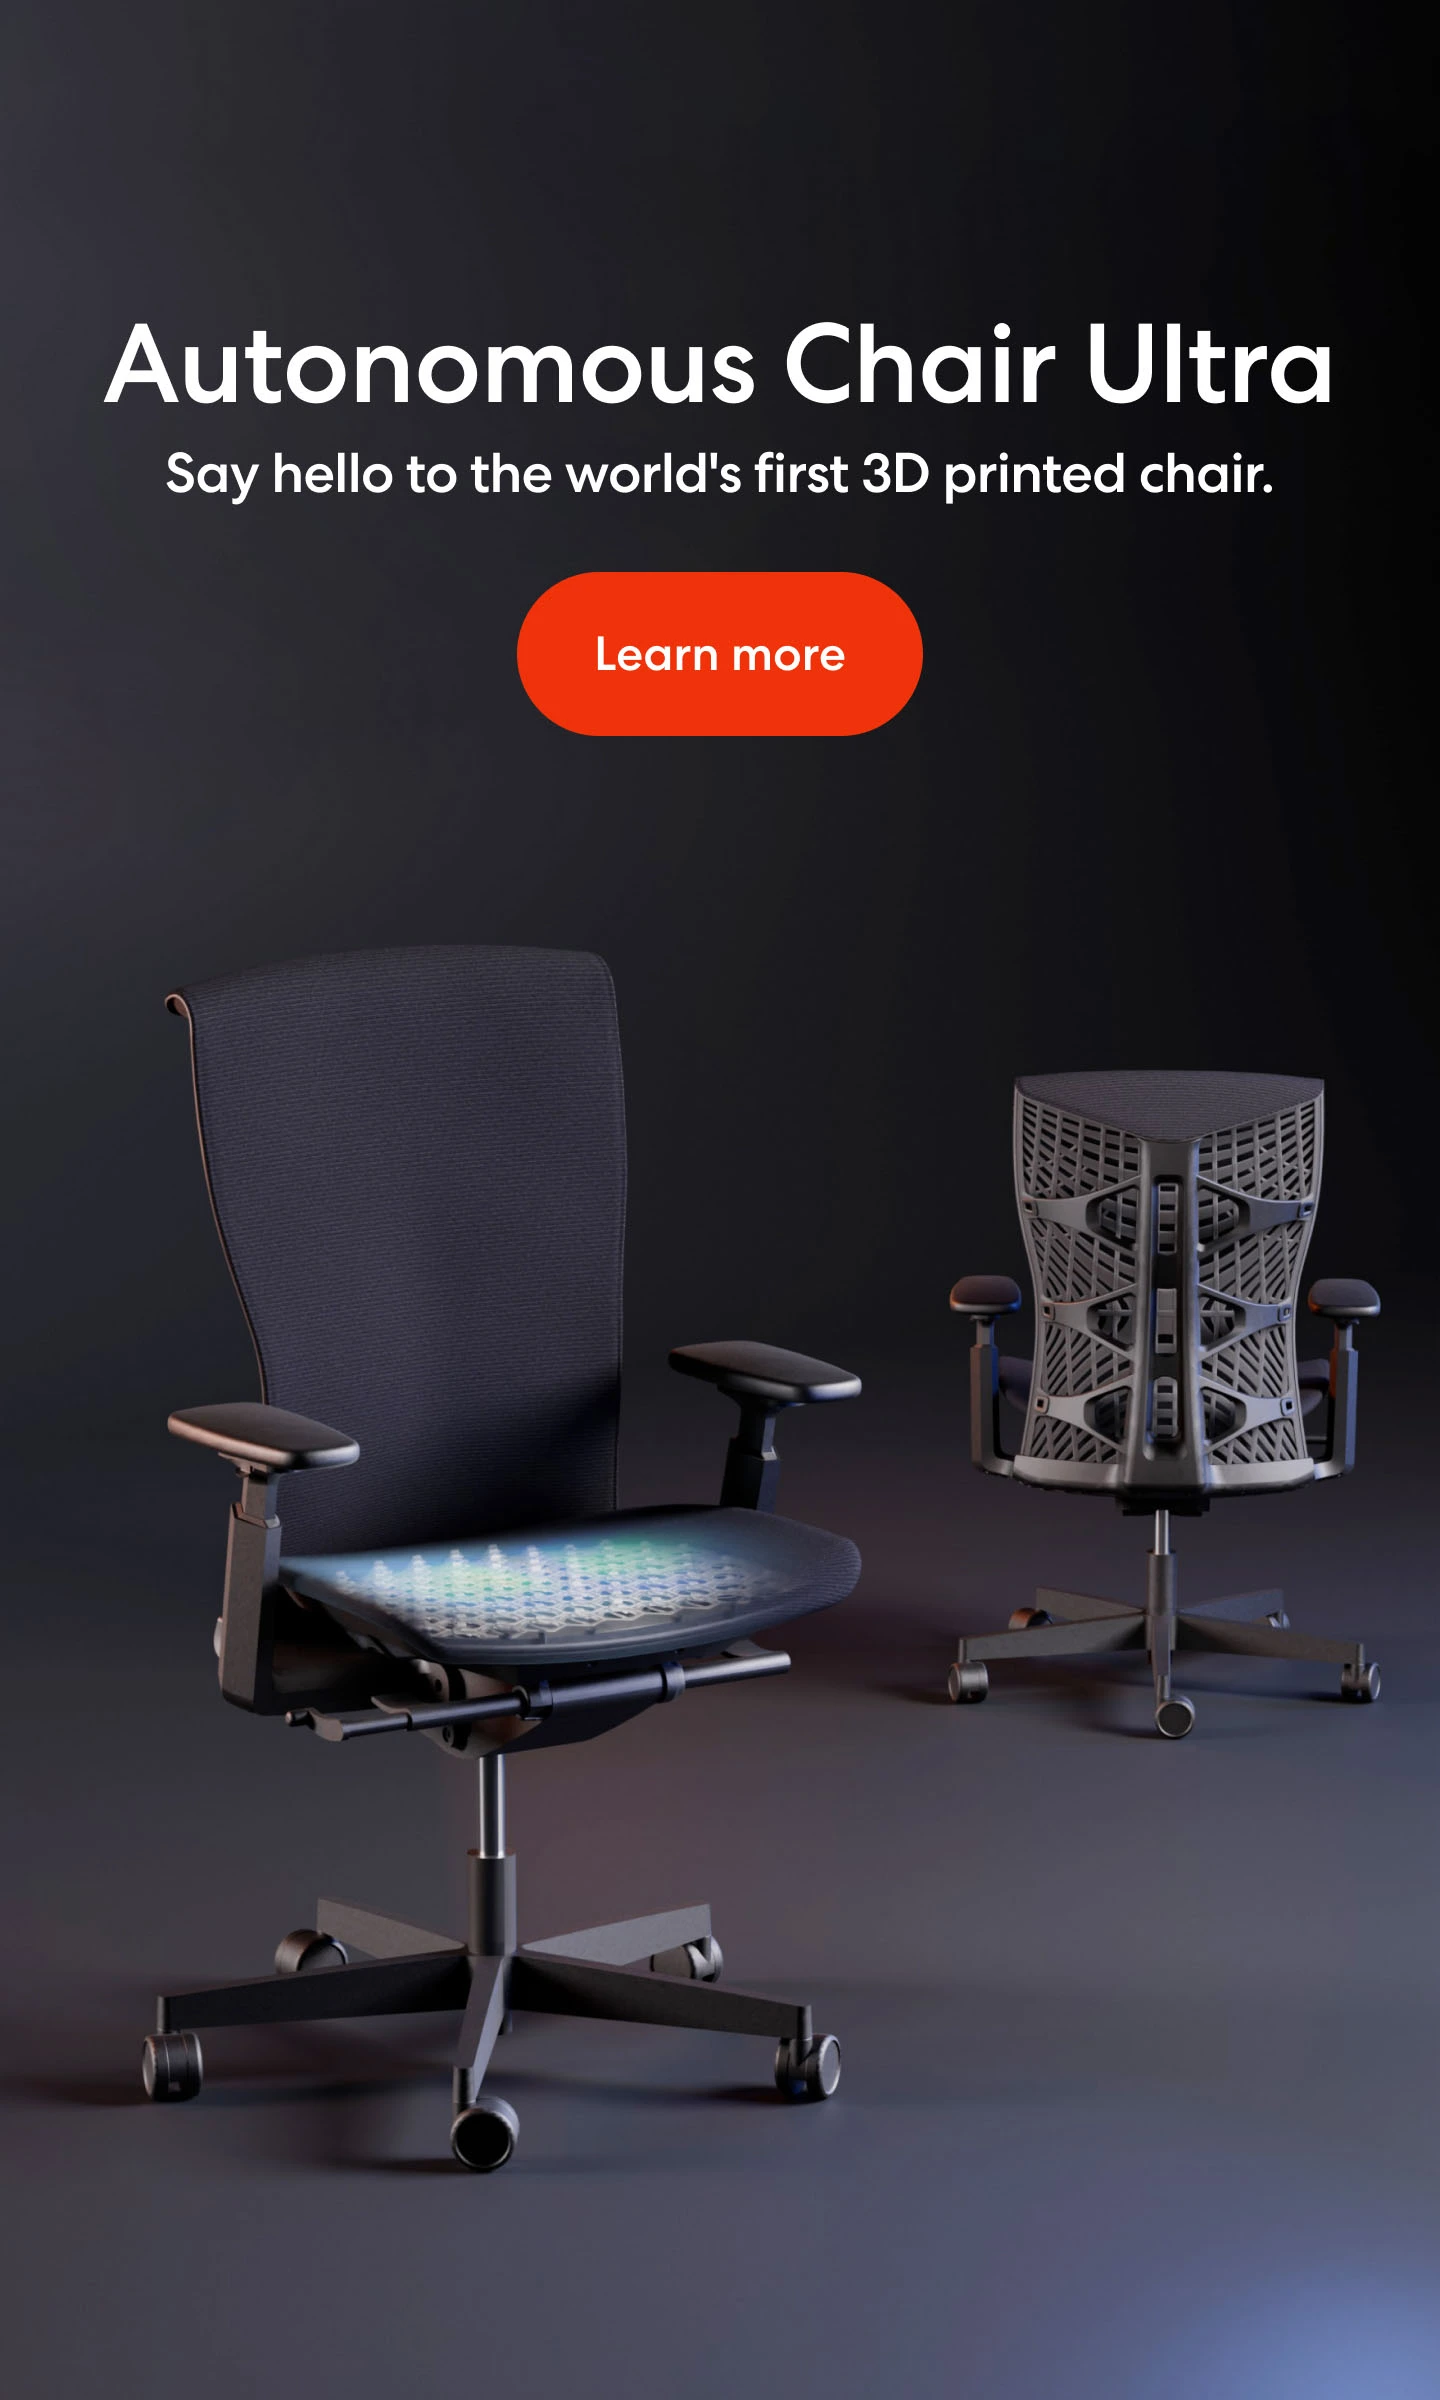 Autonomous Chair Ultra - First 3D-Printed Chair